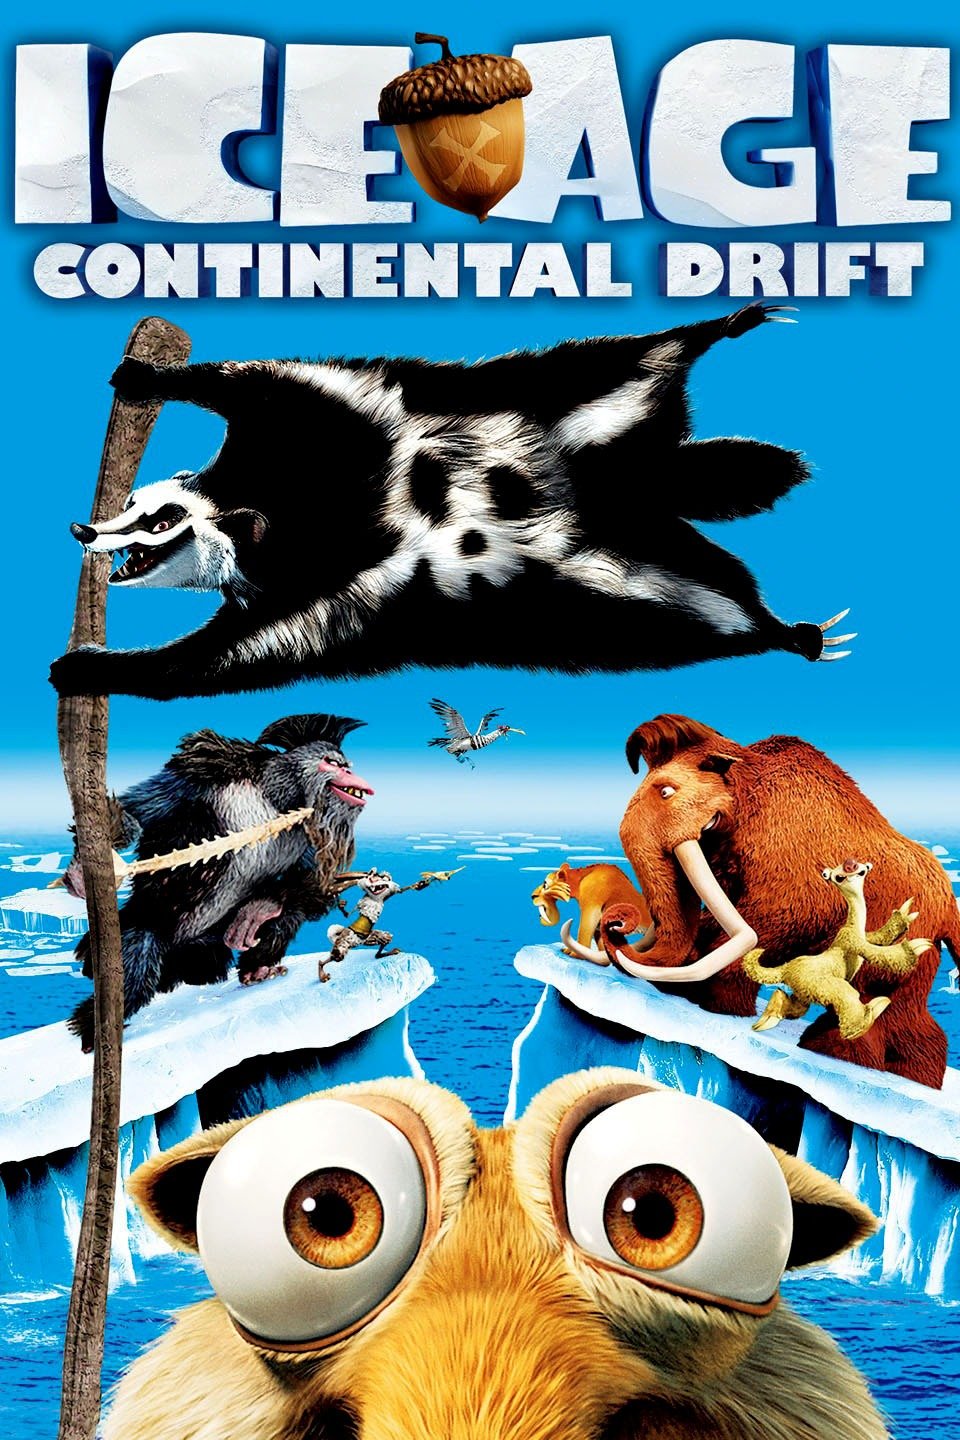 [MINI-HD] Ice Age: Continental Drift (2012) ไอซ์ เอจ เจาะยุคน้ำแข็งมหัศจรรย์ 4 กำเนิดแผ่นดินใหม่ [1080p] [พากย์ไทย 5.1 + อังกฤษ DTS] [x264] [บรรยายไทย + อังกฤษ] [เสียงไทย + ซับไทย] [ONE2UP]